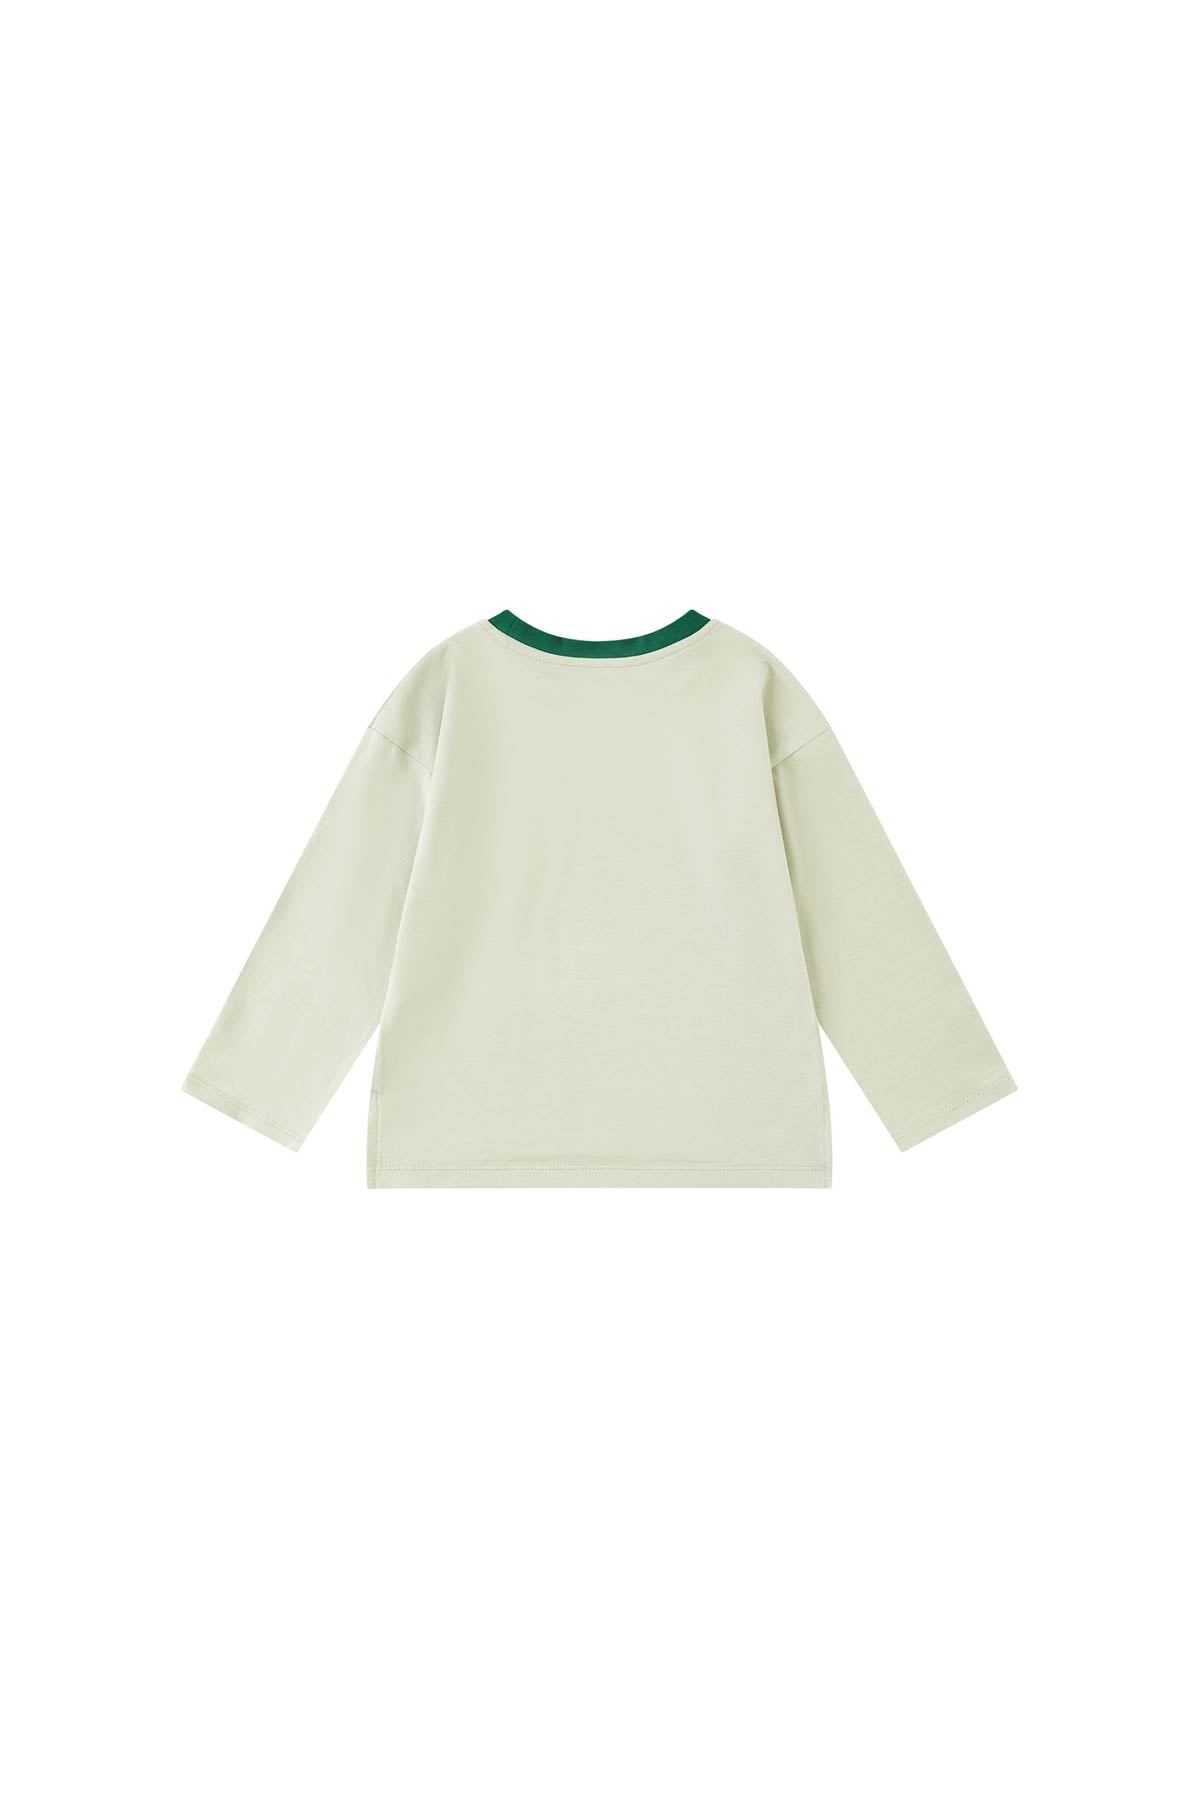 Toddler Long Sleeve Tee Shirt-Tender Green